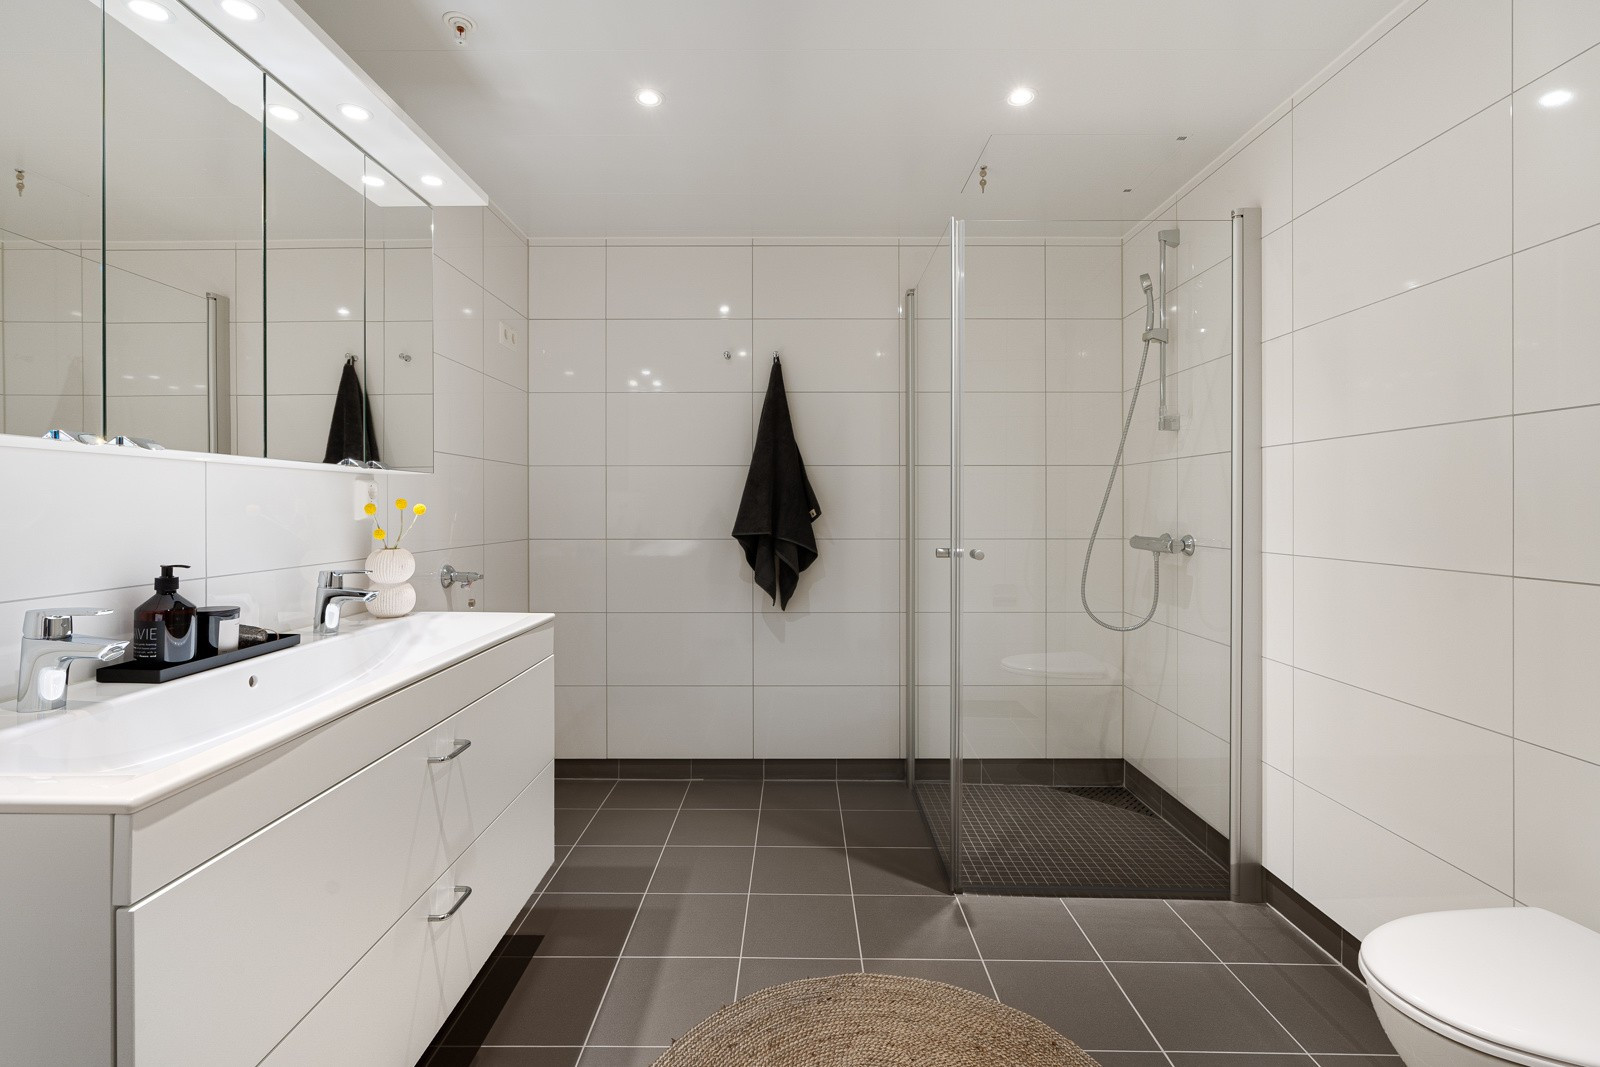 Flislagt bad, varmekabler i gulv og plassbesparende løsninger som dusj med innfellbare glassdører.